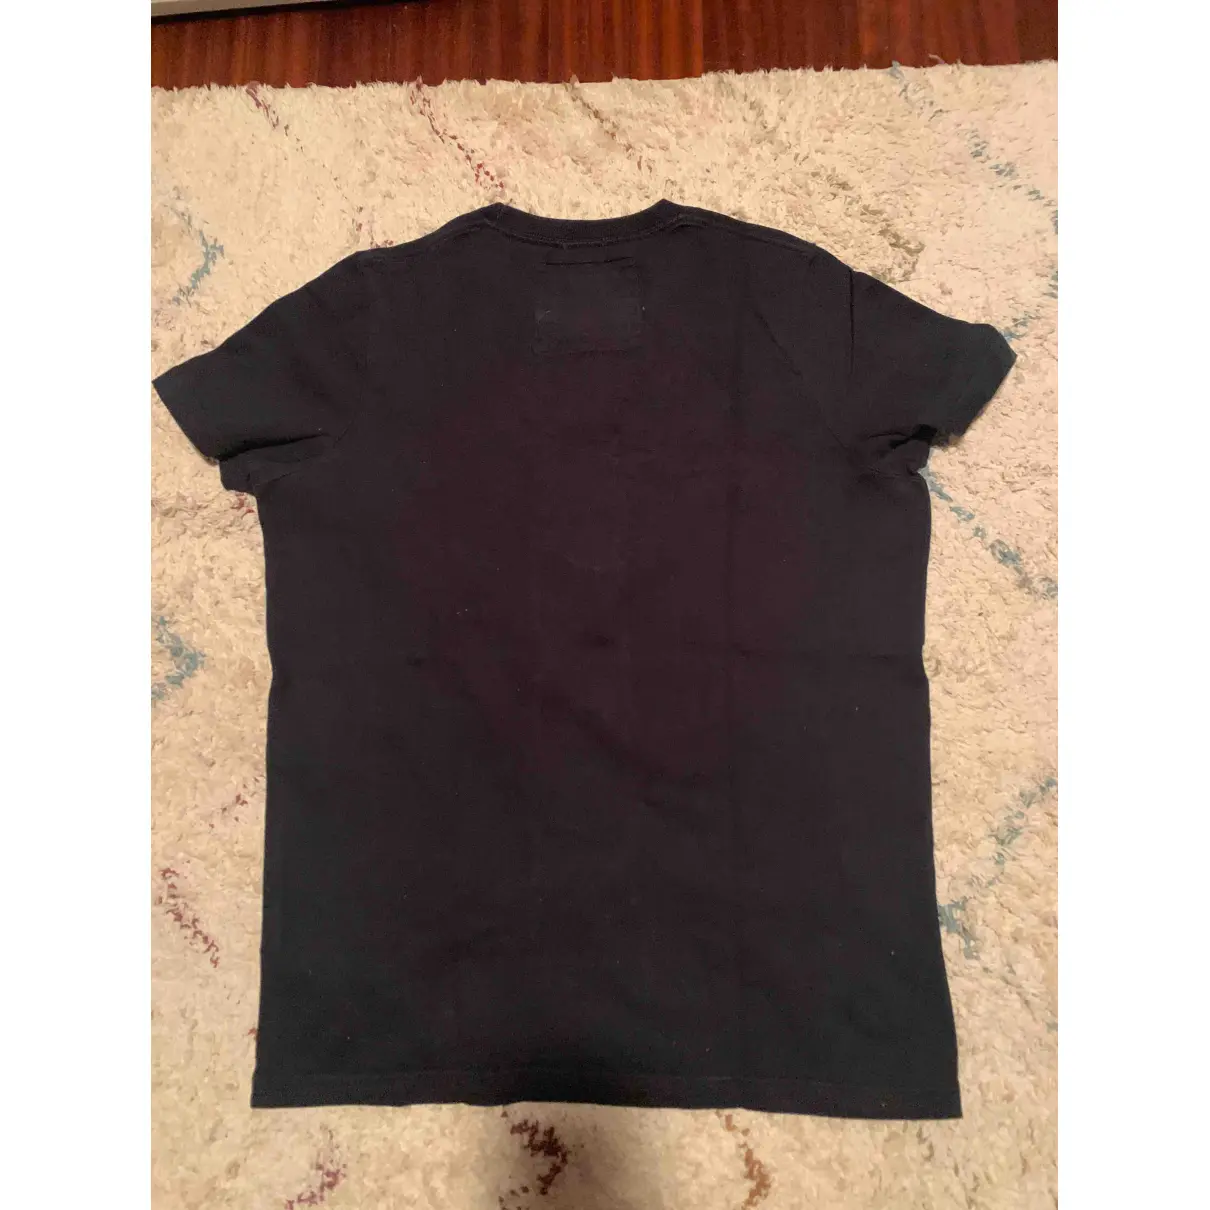 Buy Abercrombie & Fitch Black Cotton T-shirt online